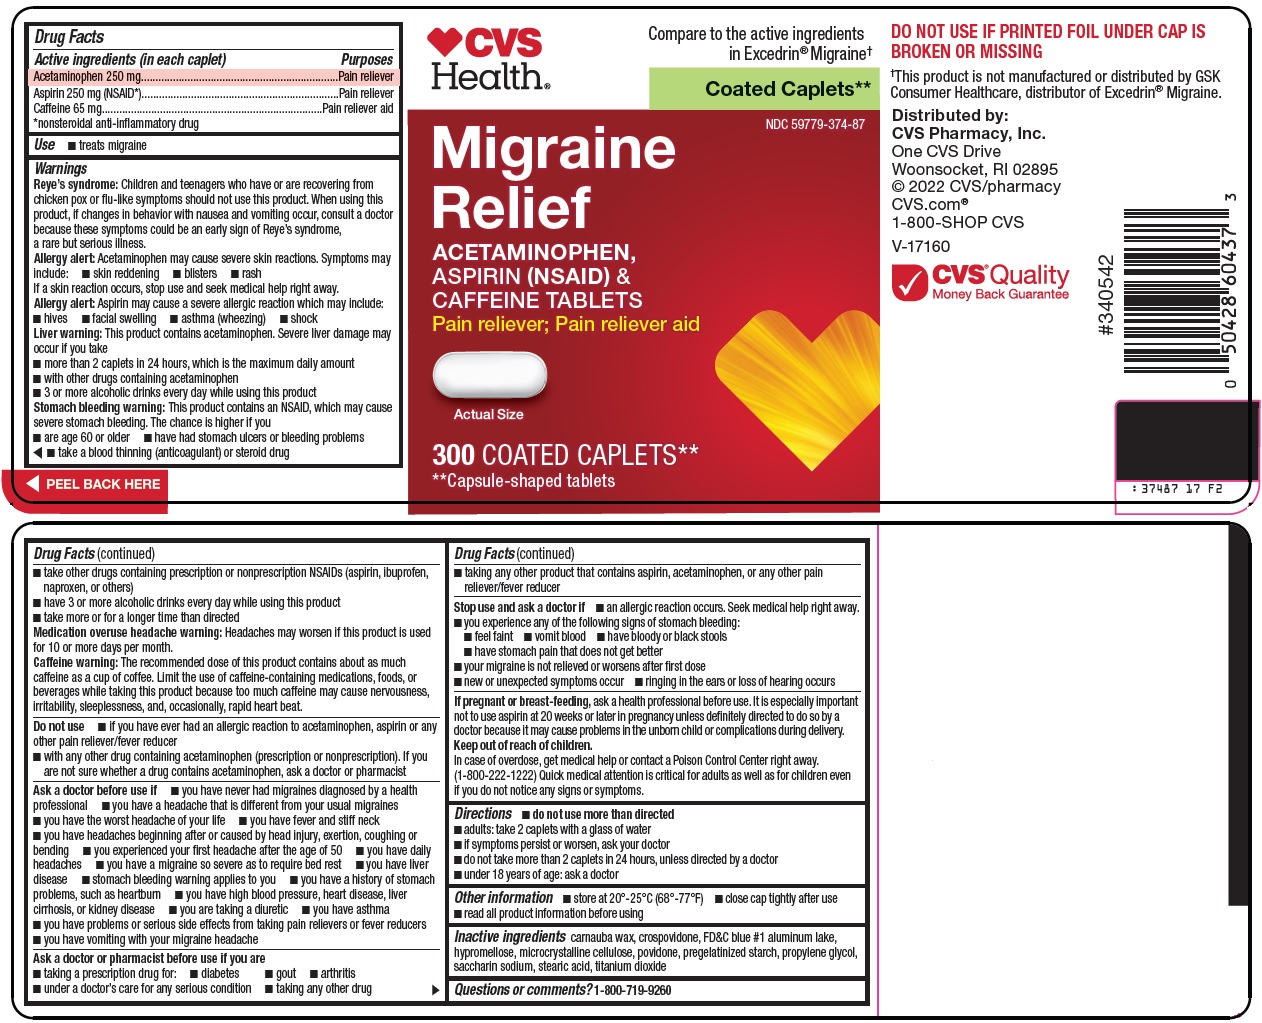 Migraine Relief Label